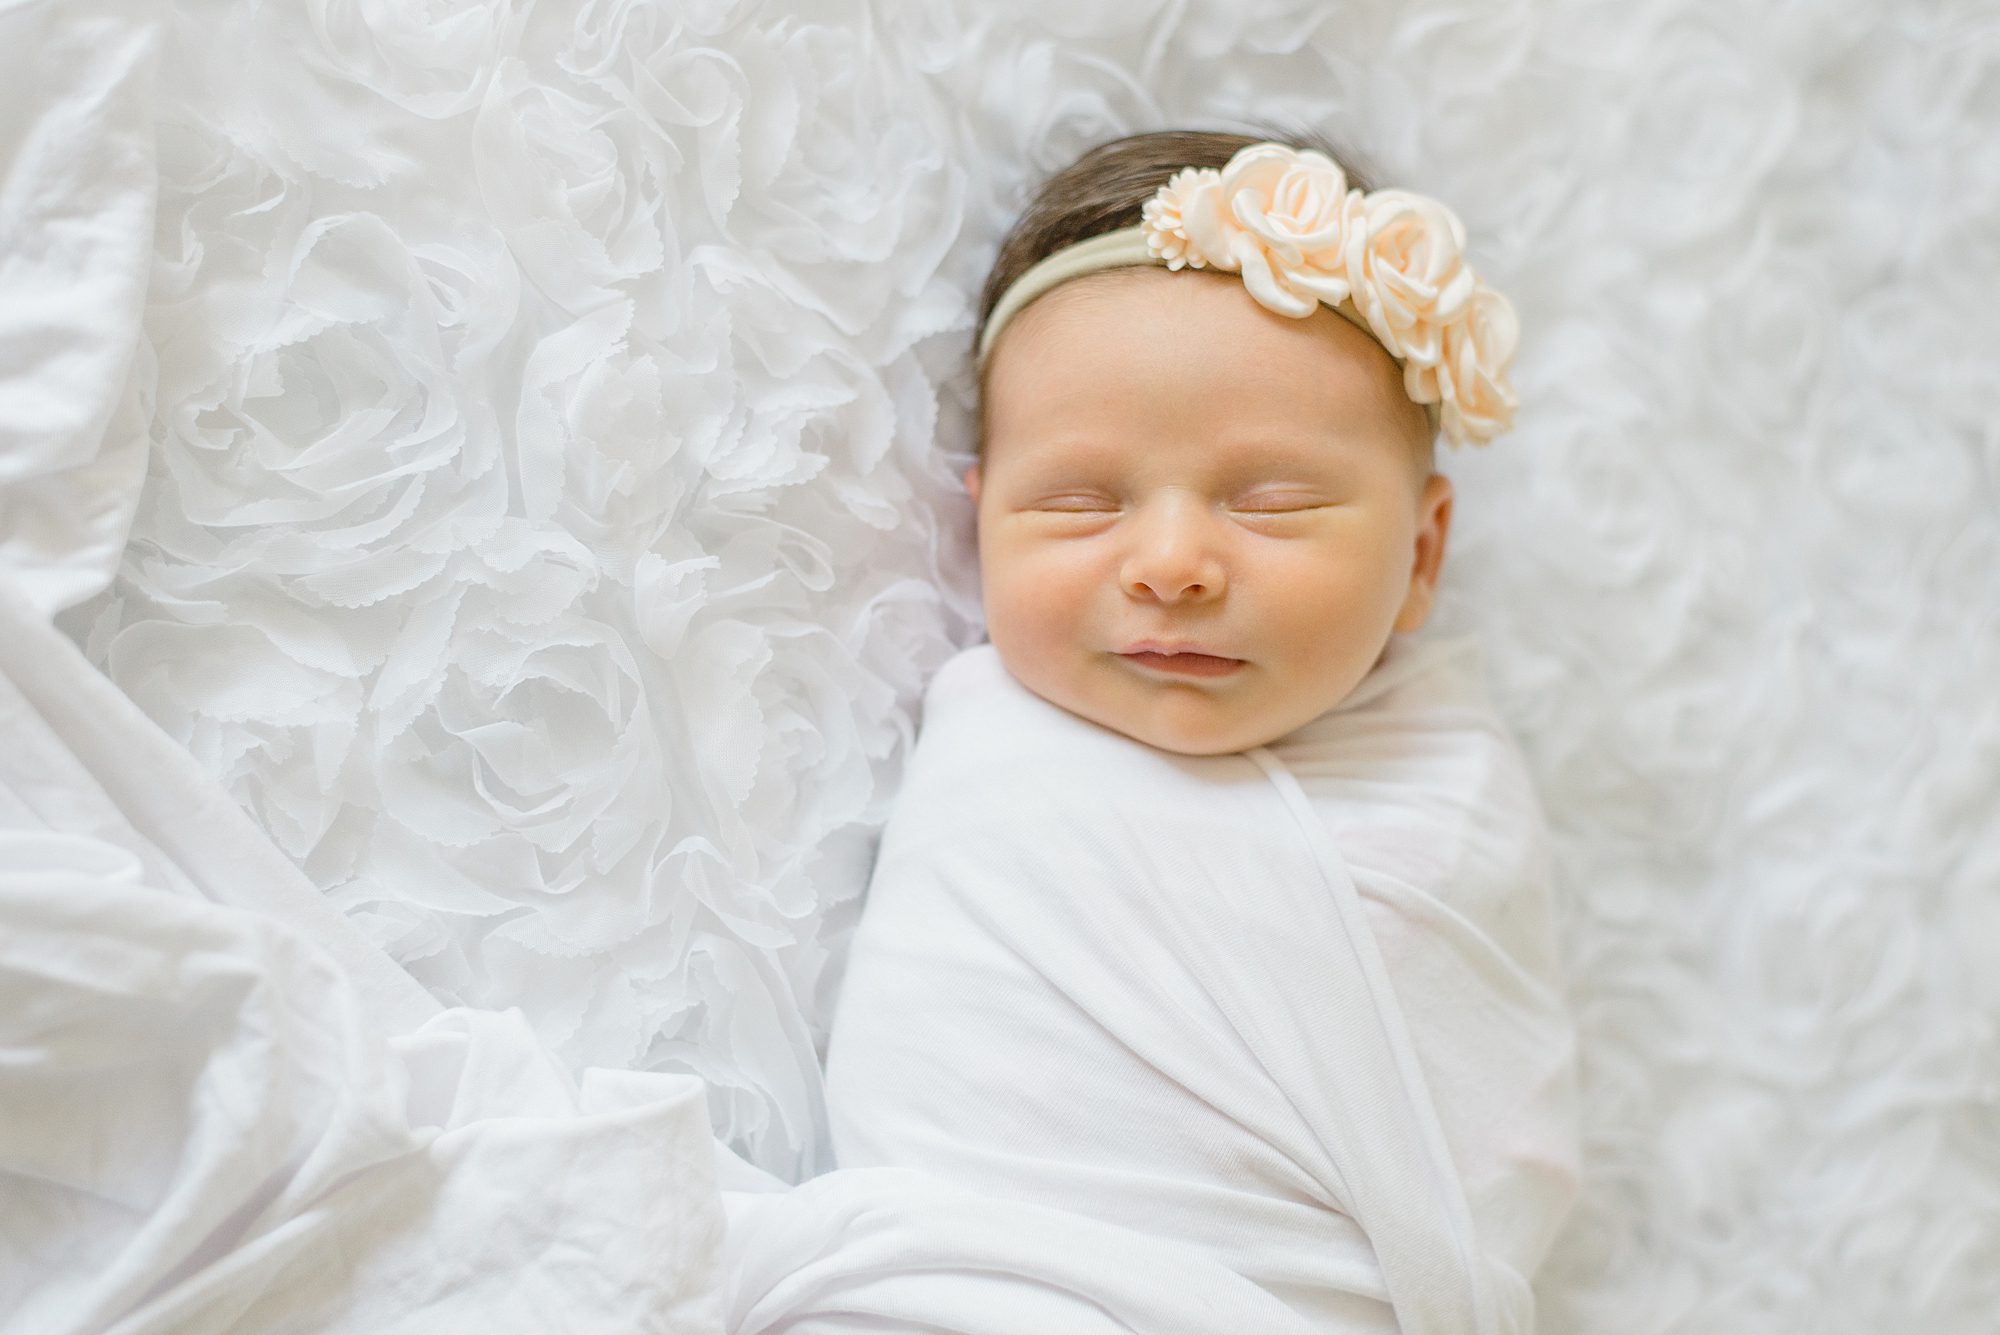 Timeless Newborn Portraits in San Marcos, CA by Leigh Castelli photography, a San Diego newborn photographer